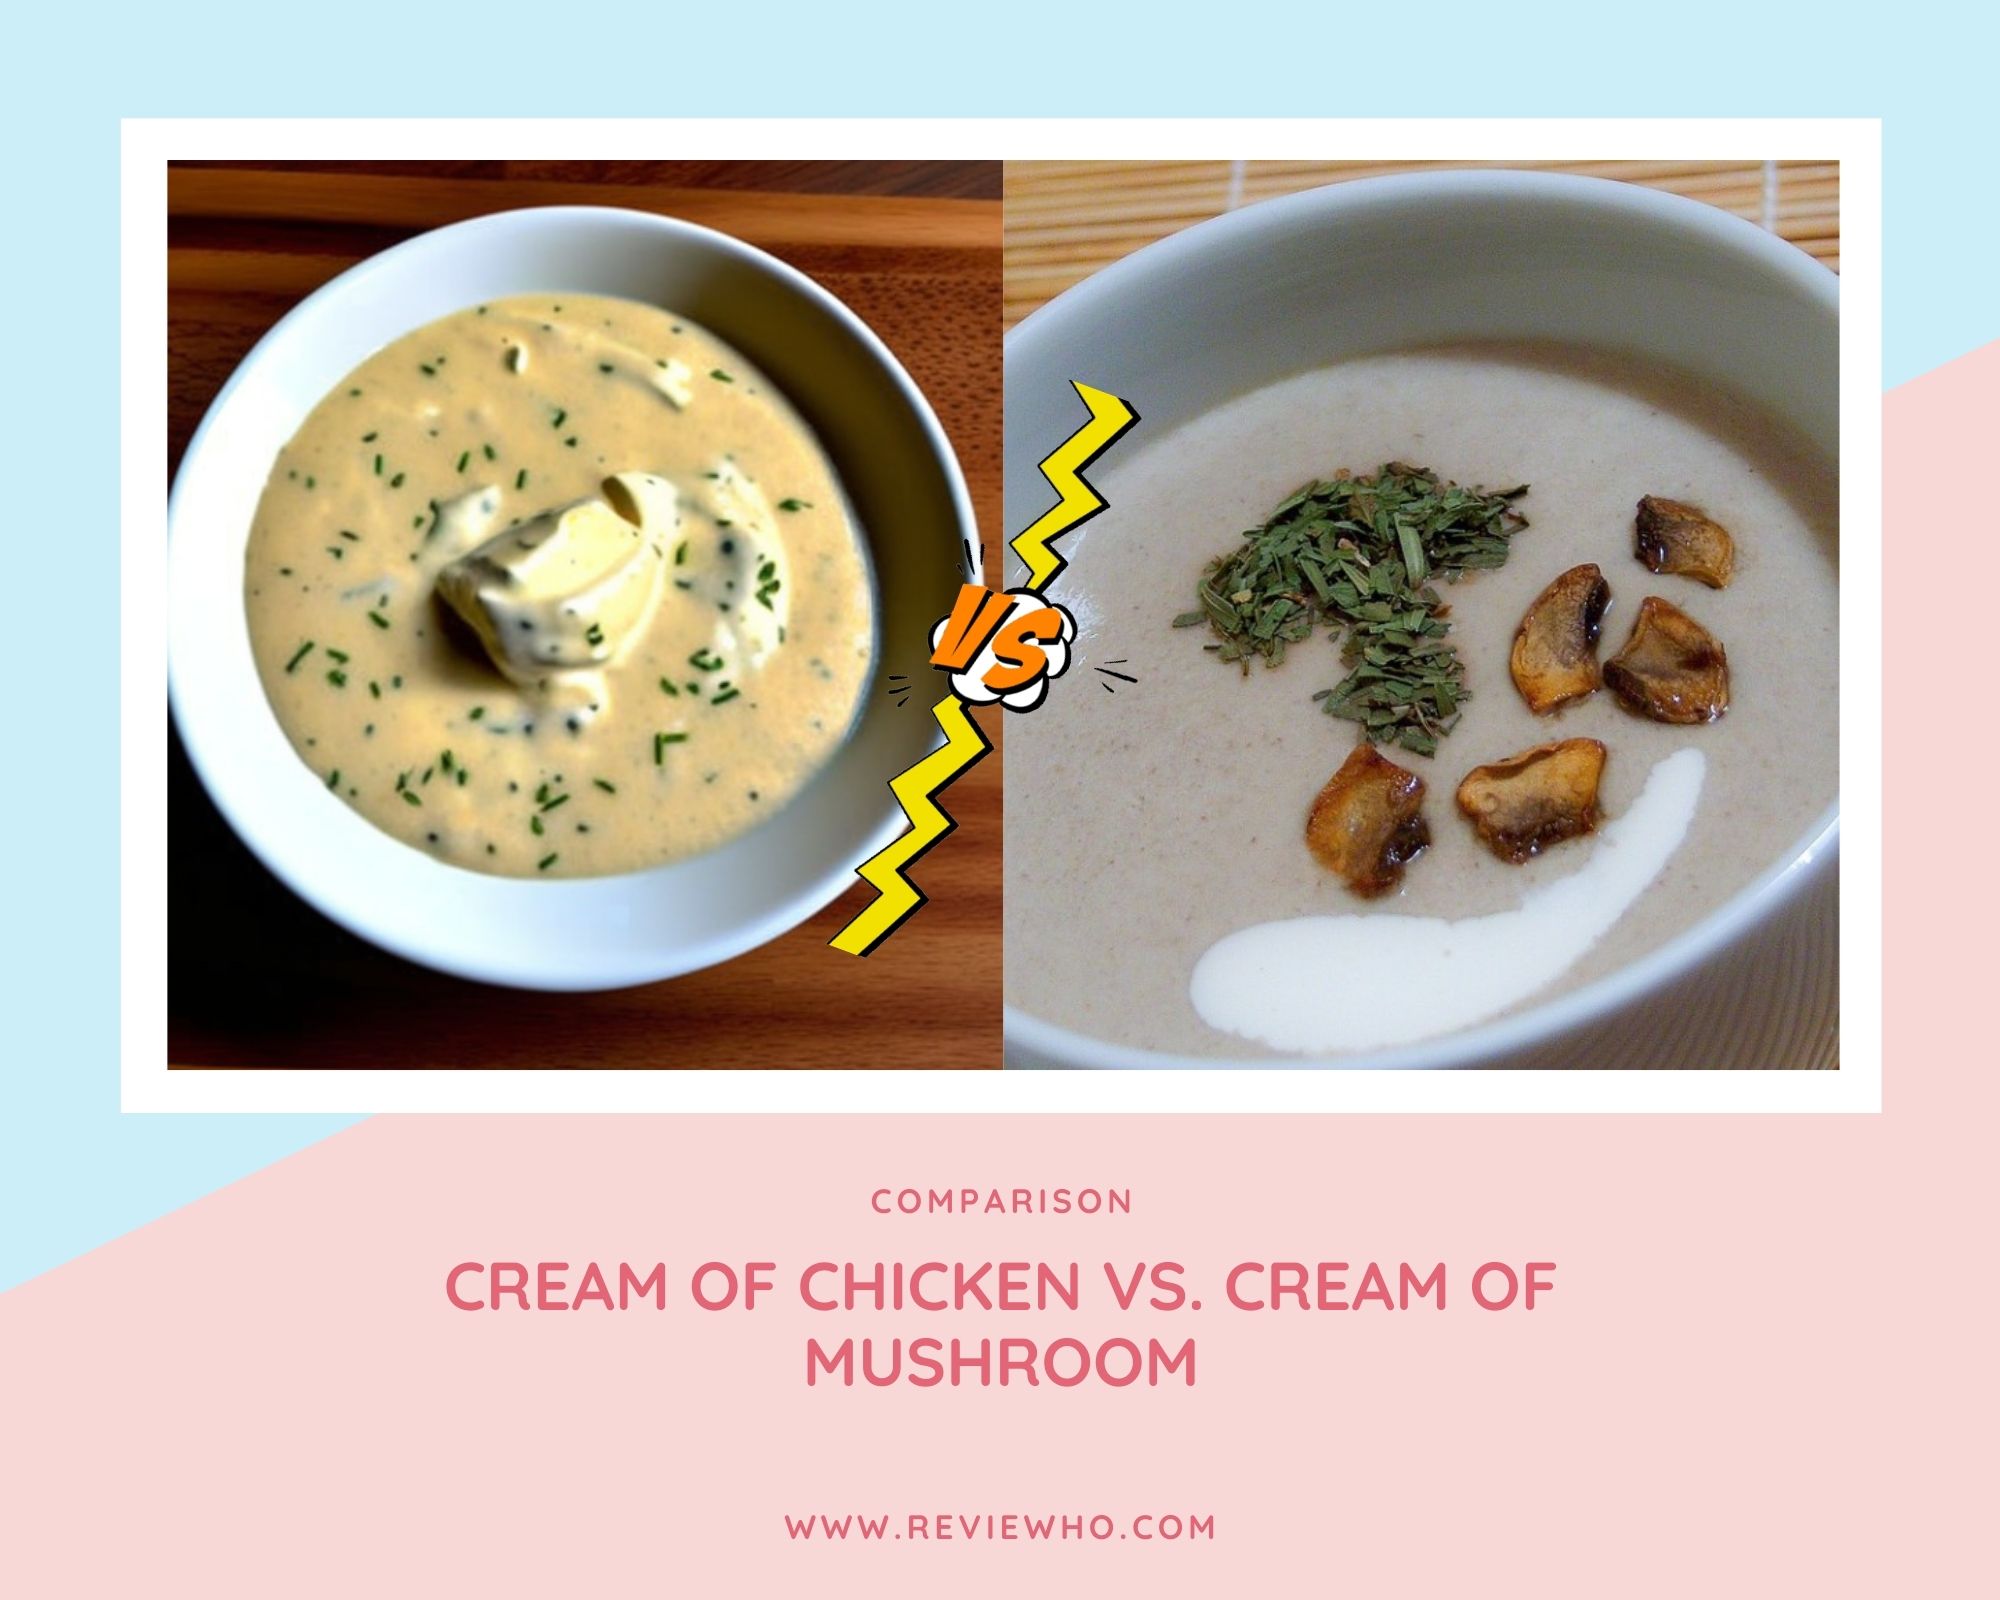 Cream of Chicken or Cream of Mushroom